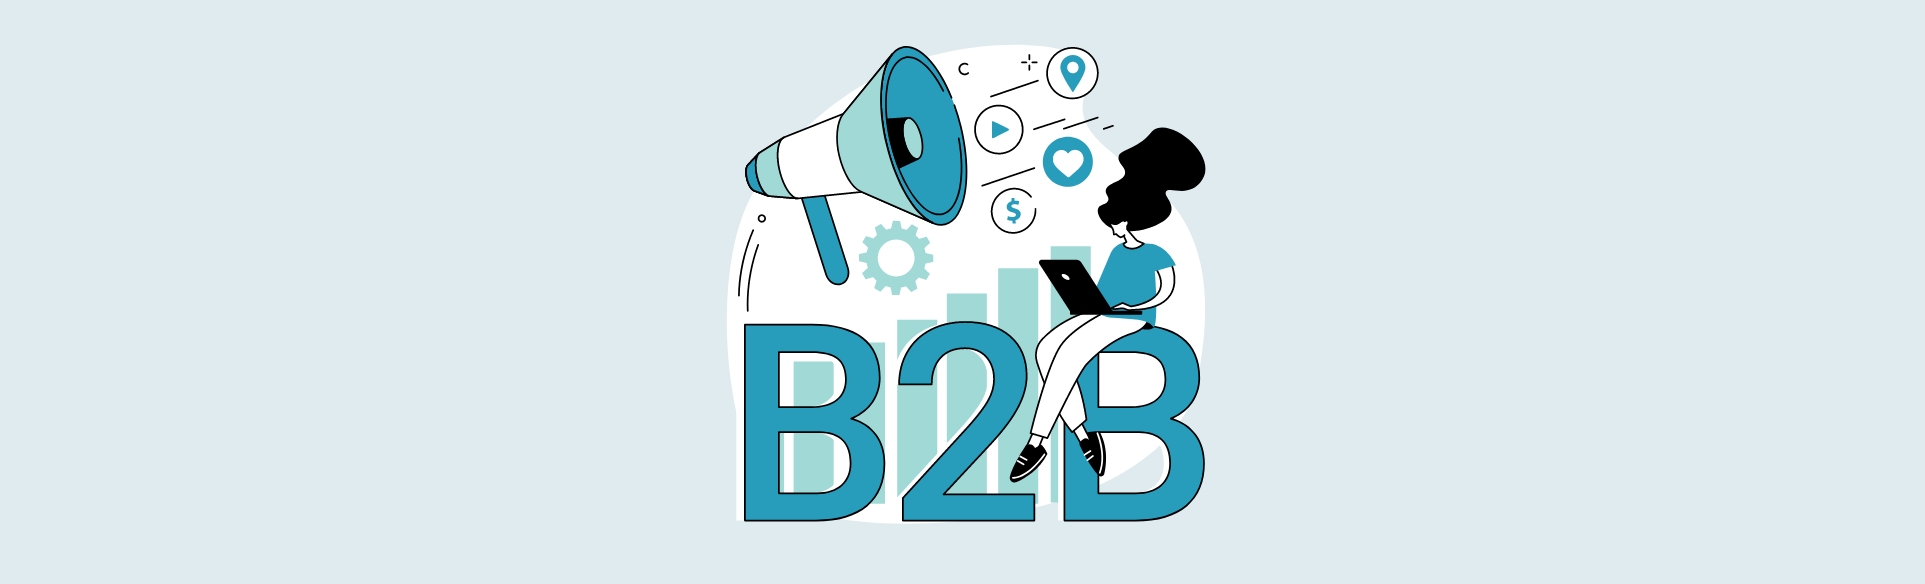 B2B Ecommerce Website: Best Practices + Design Examples